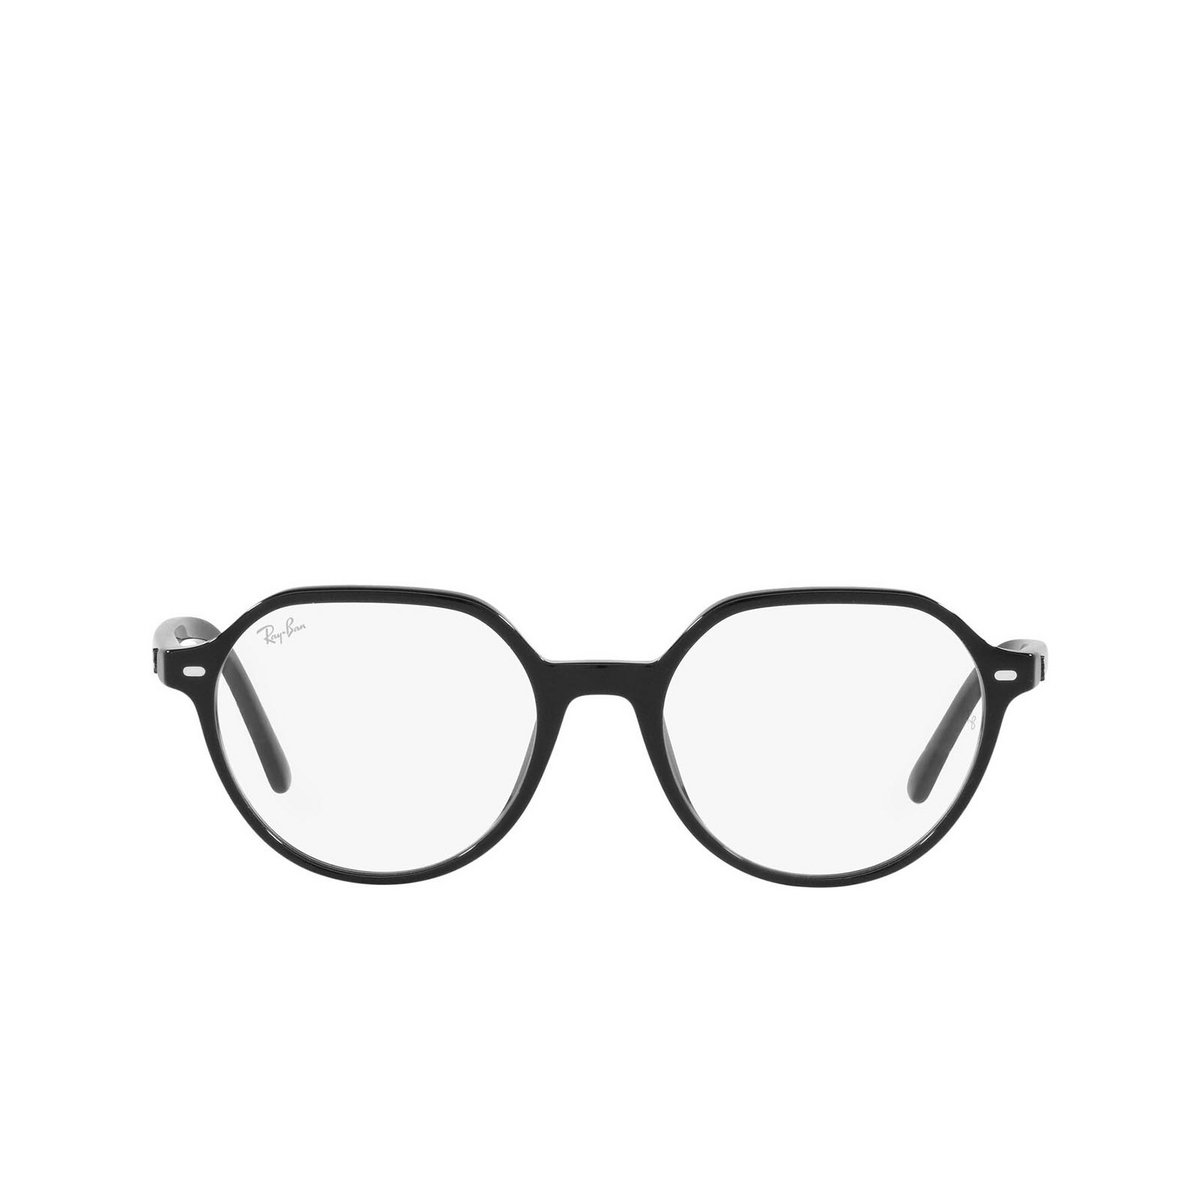 Ray-Ban THALIA Eyeglasses 2000 Black - front view